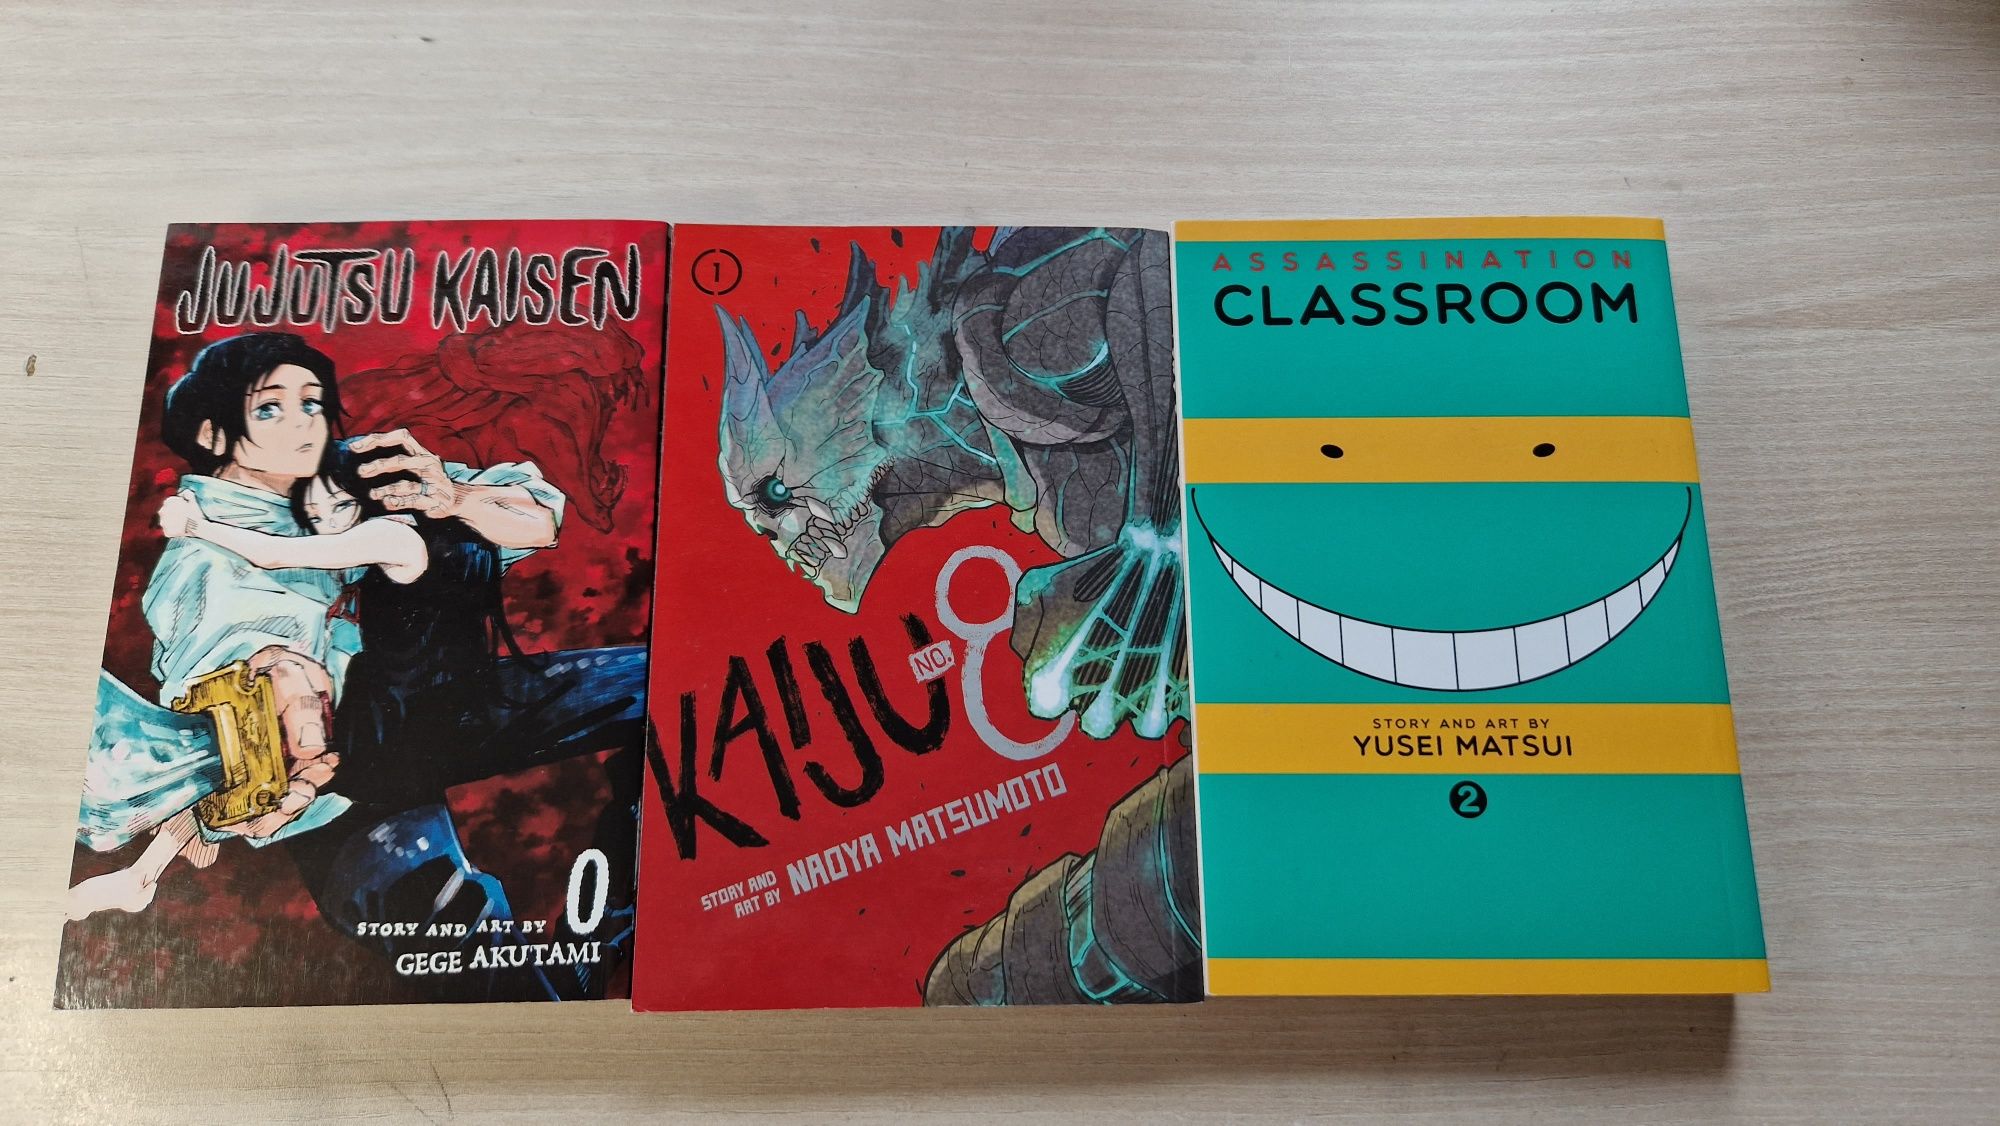 Manga Jujutsu Kaisen, Kaiju No.8 și Assassination Classroom